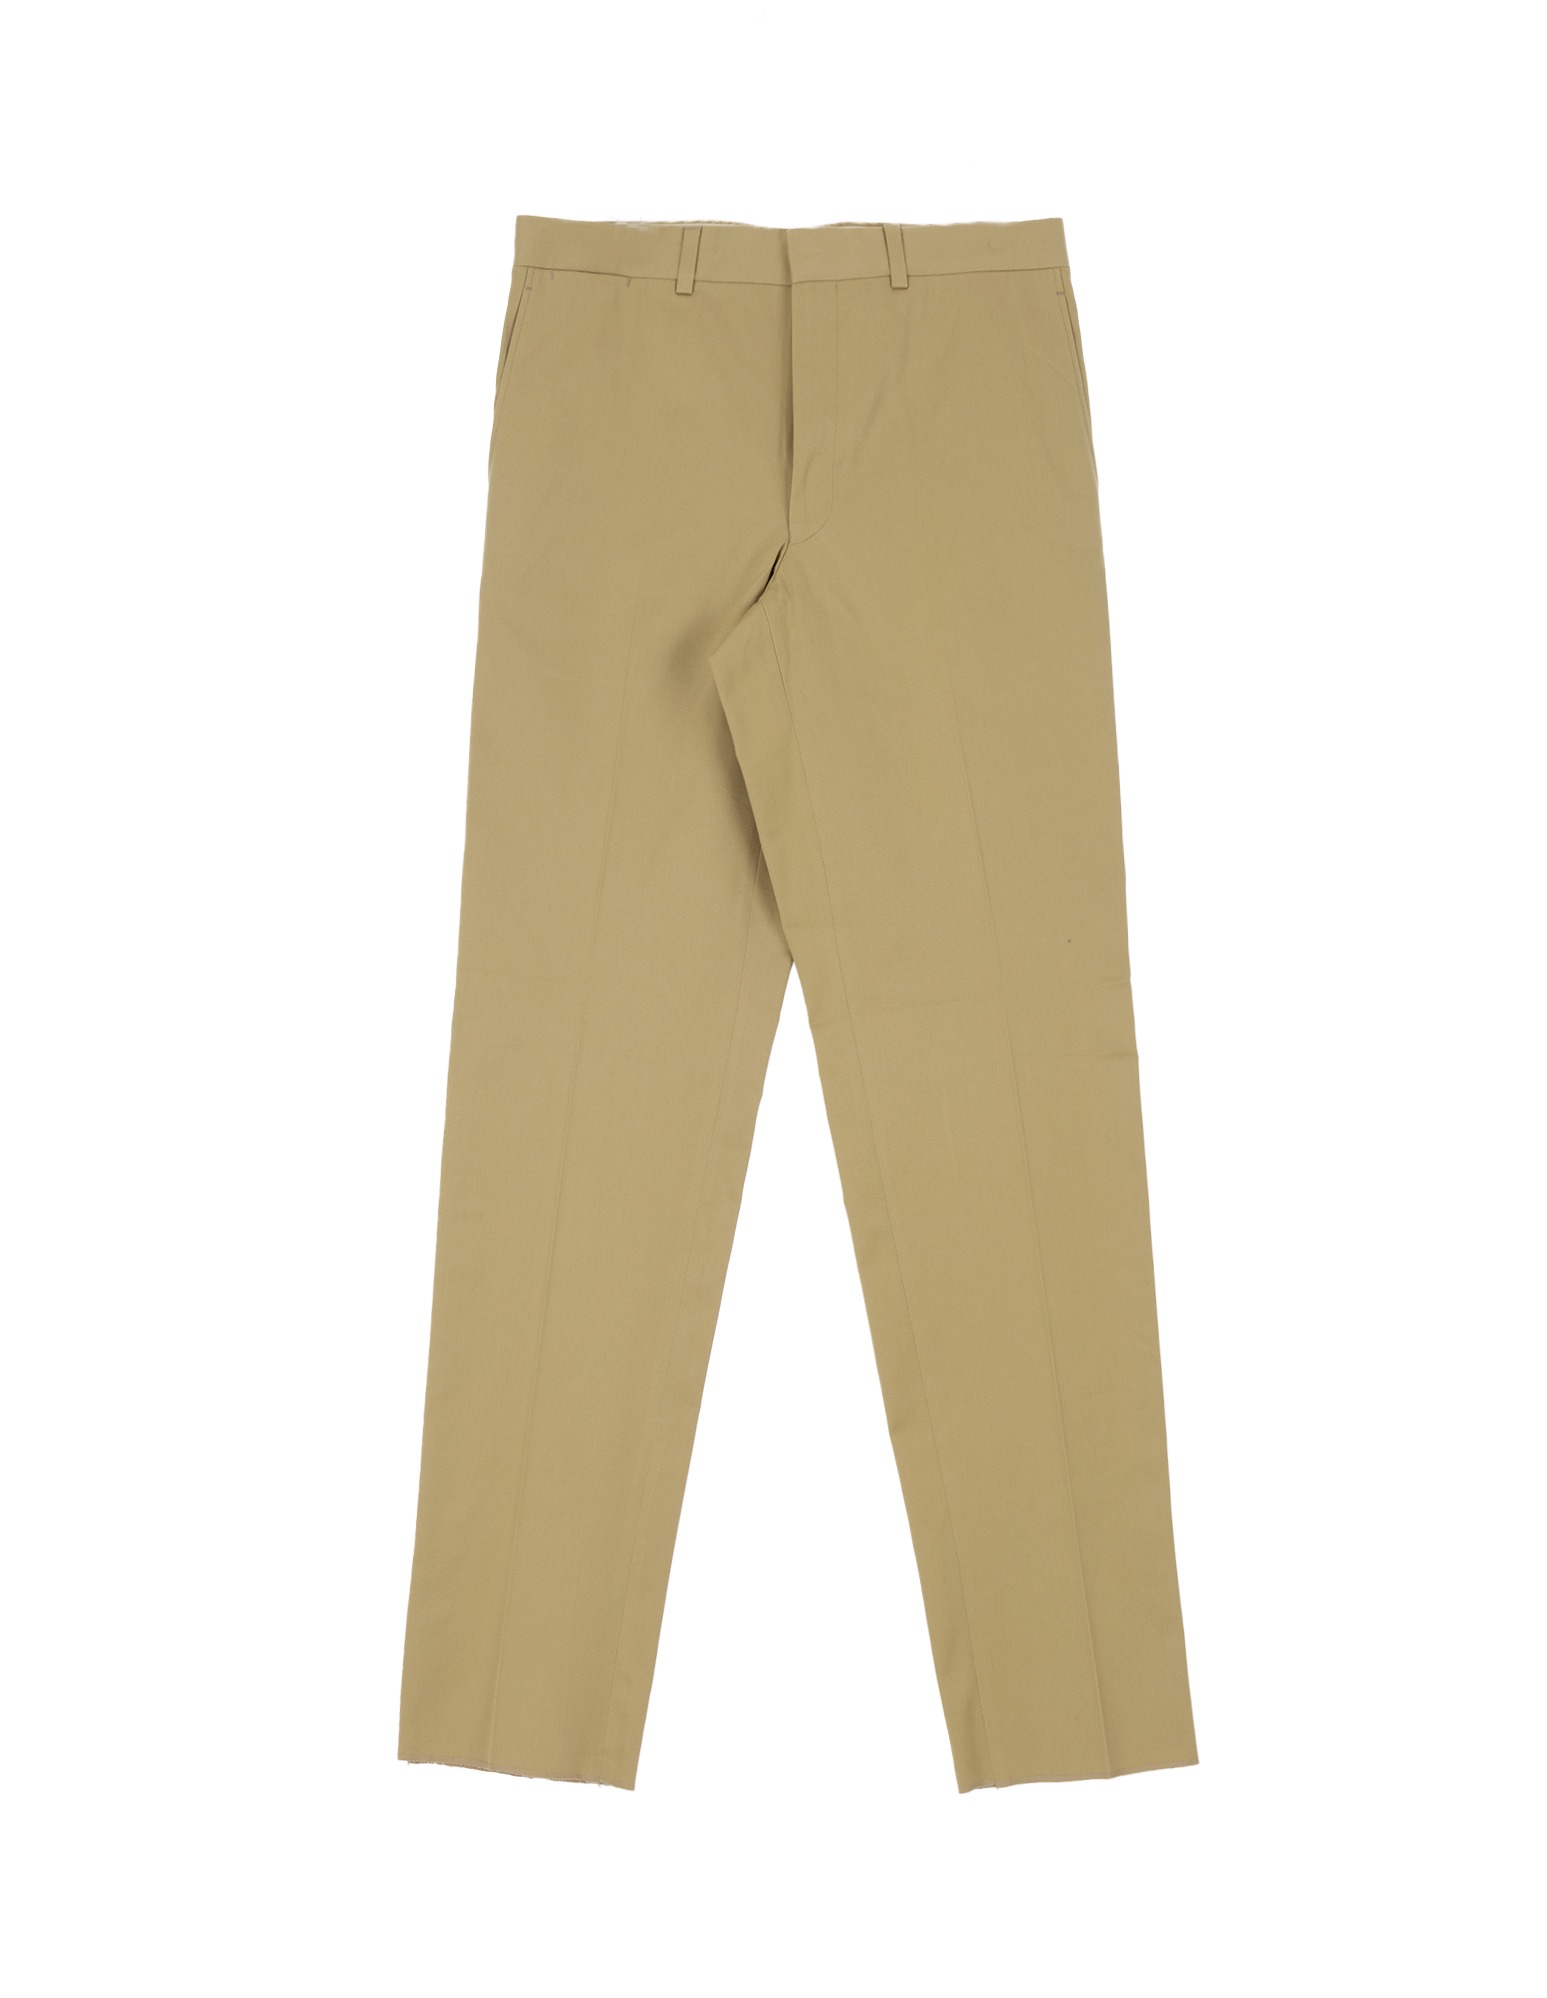 Cotton Drill Cloth Trousers (Khaki)